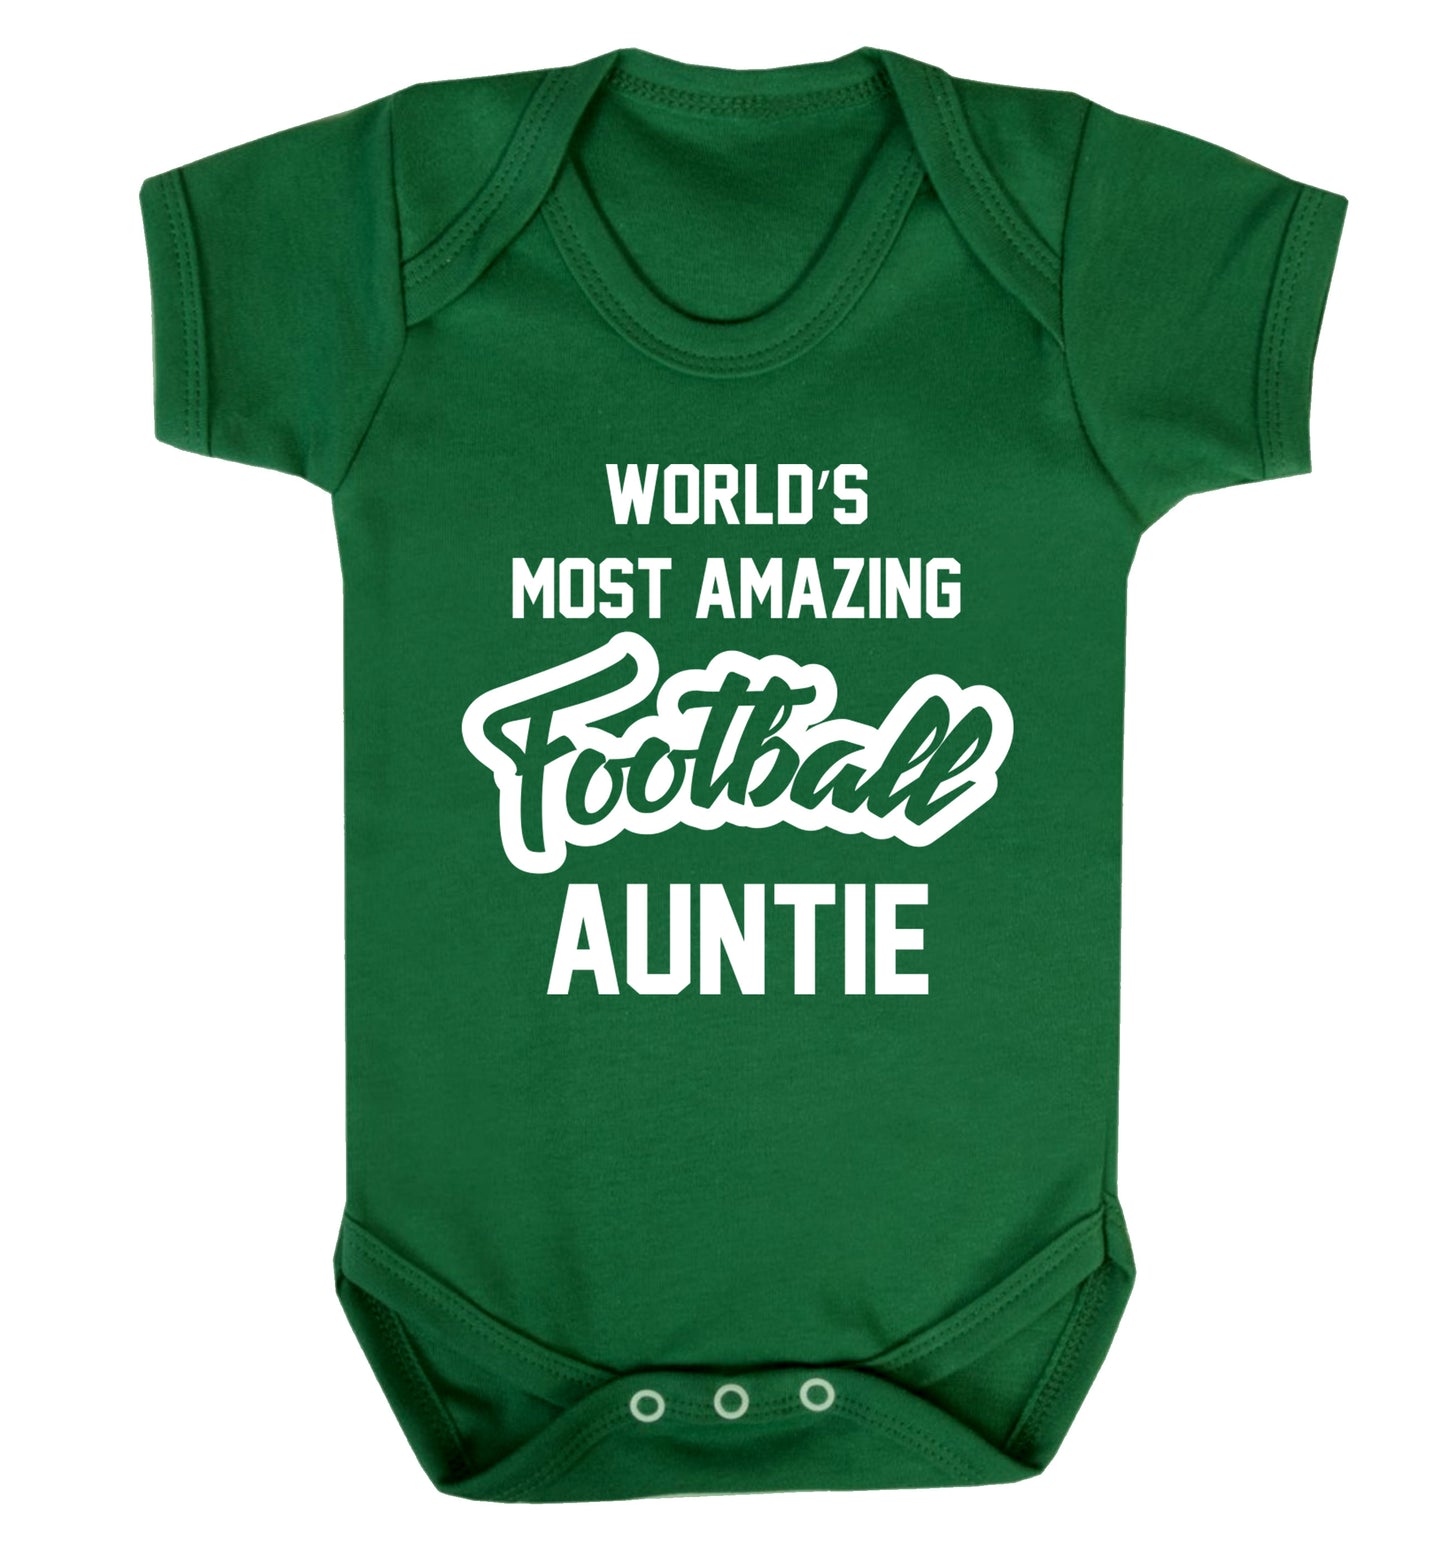 Worlds most amazing football auntie Baby Vest green 18-24 months